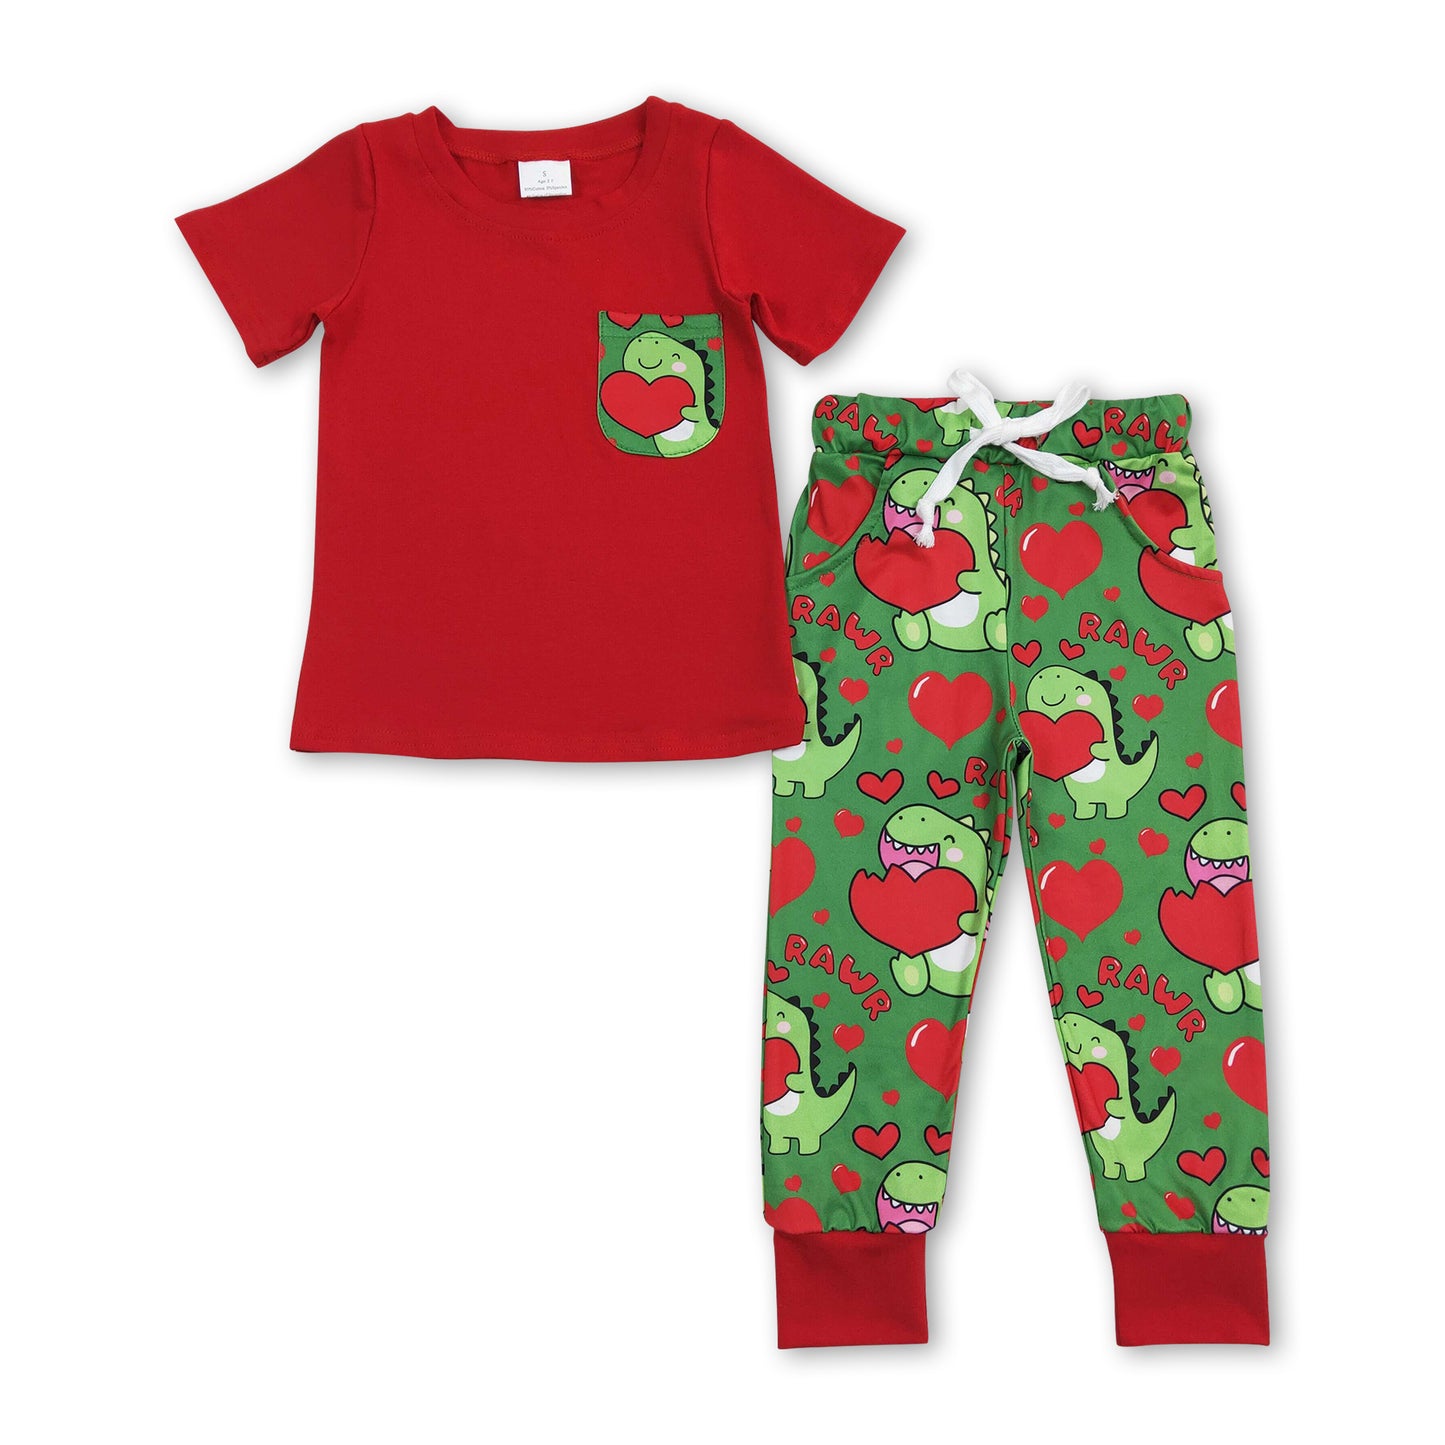 Rawr heart dinosaur pocket top pants boy Valentine's outfits